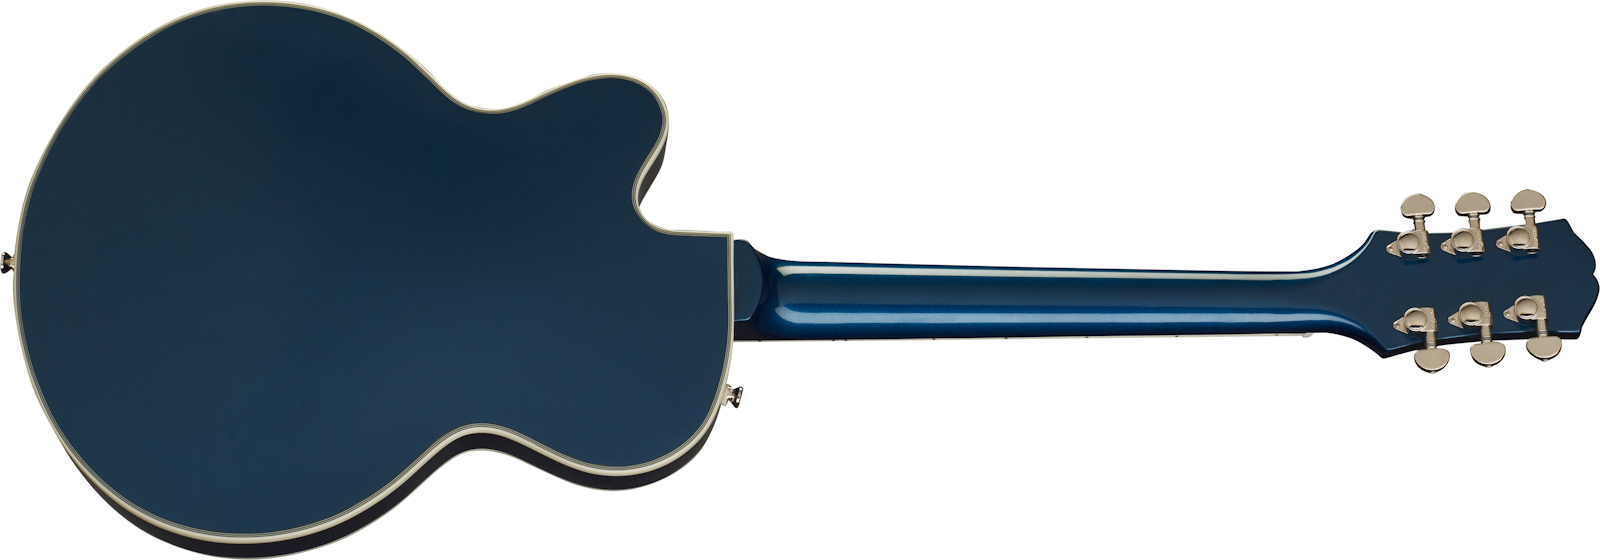 Epiphone Uptown Kat Es Original 2h Ht Eb - Sapphire Blue Metallic - Semi-hollow electric guitar - Variation 1